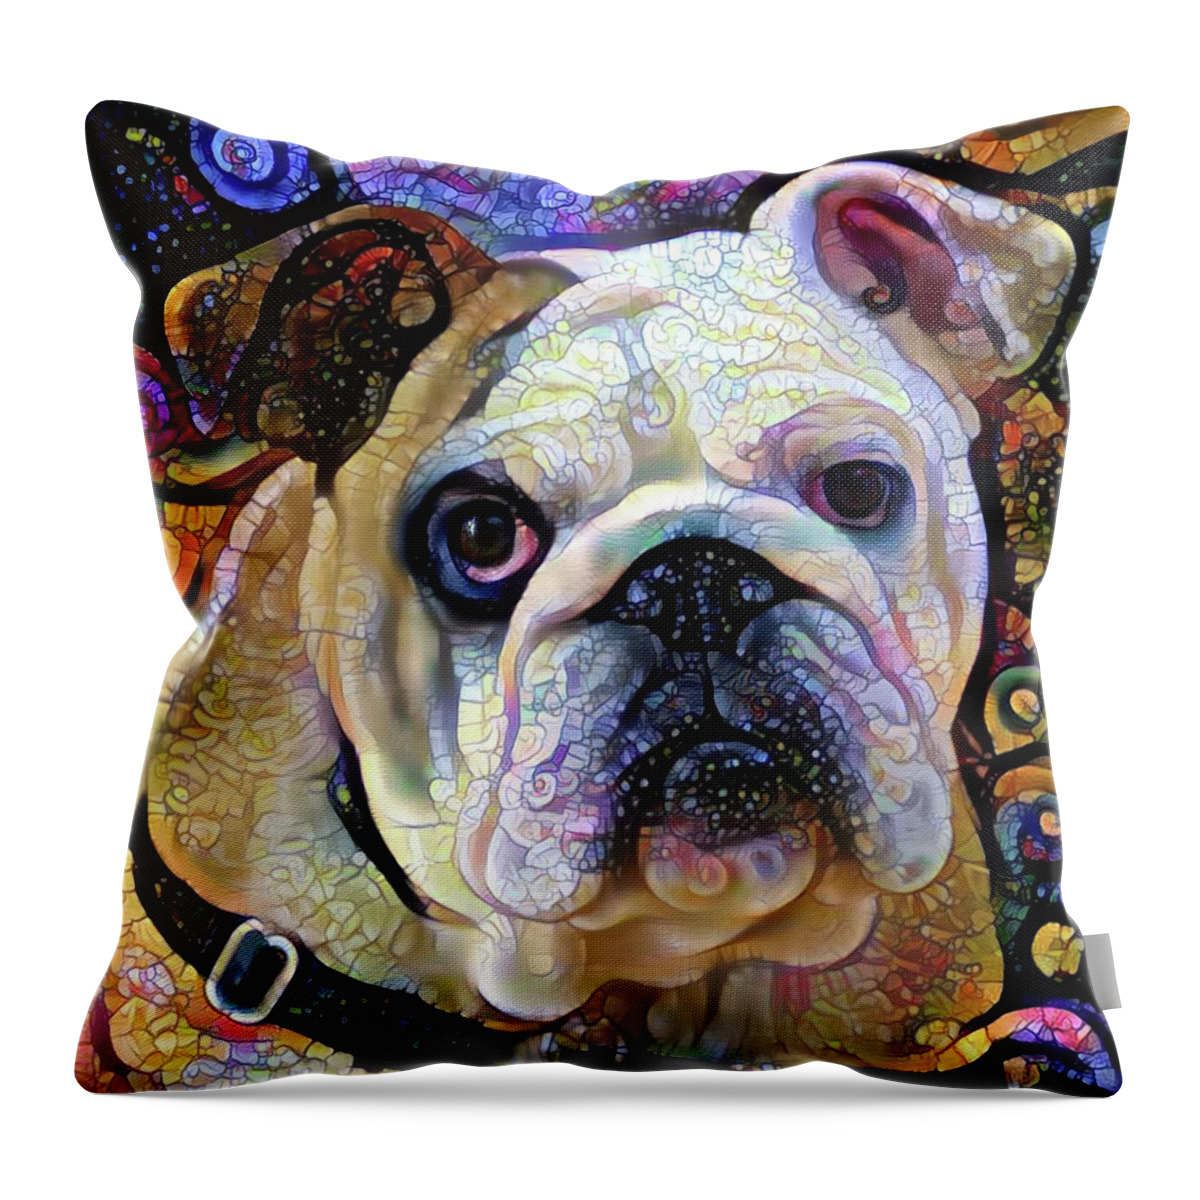 English Bulldog Throw Pillow featuring the digital art English Bulldog Colorful Art by Peggy Collins